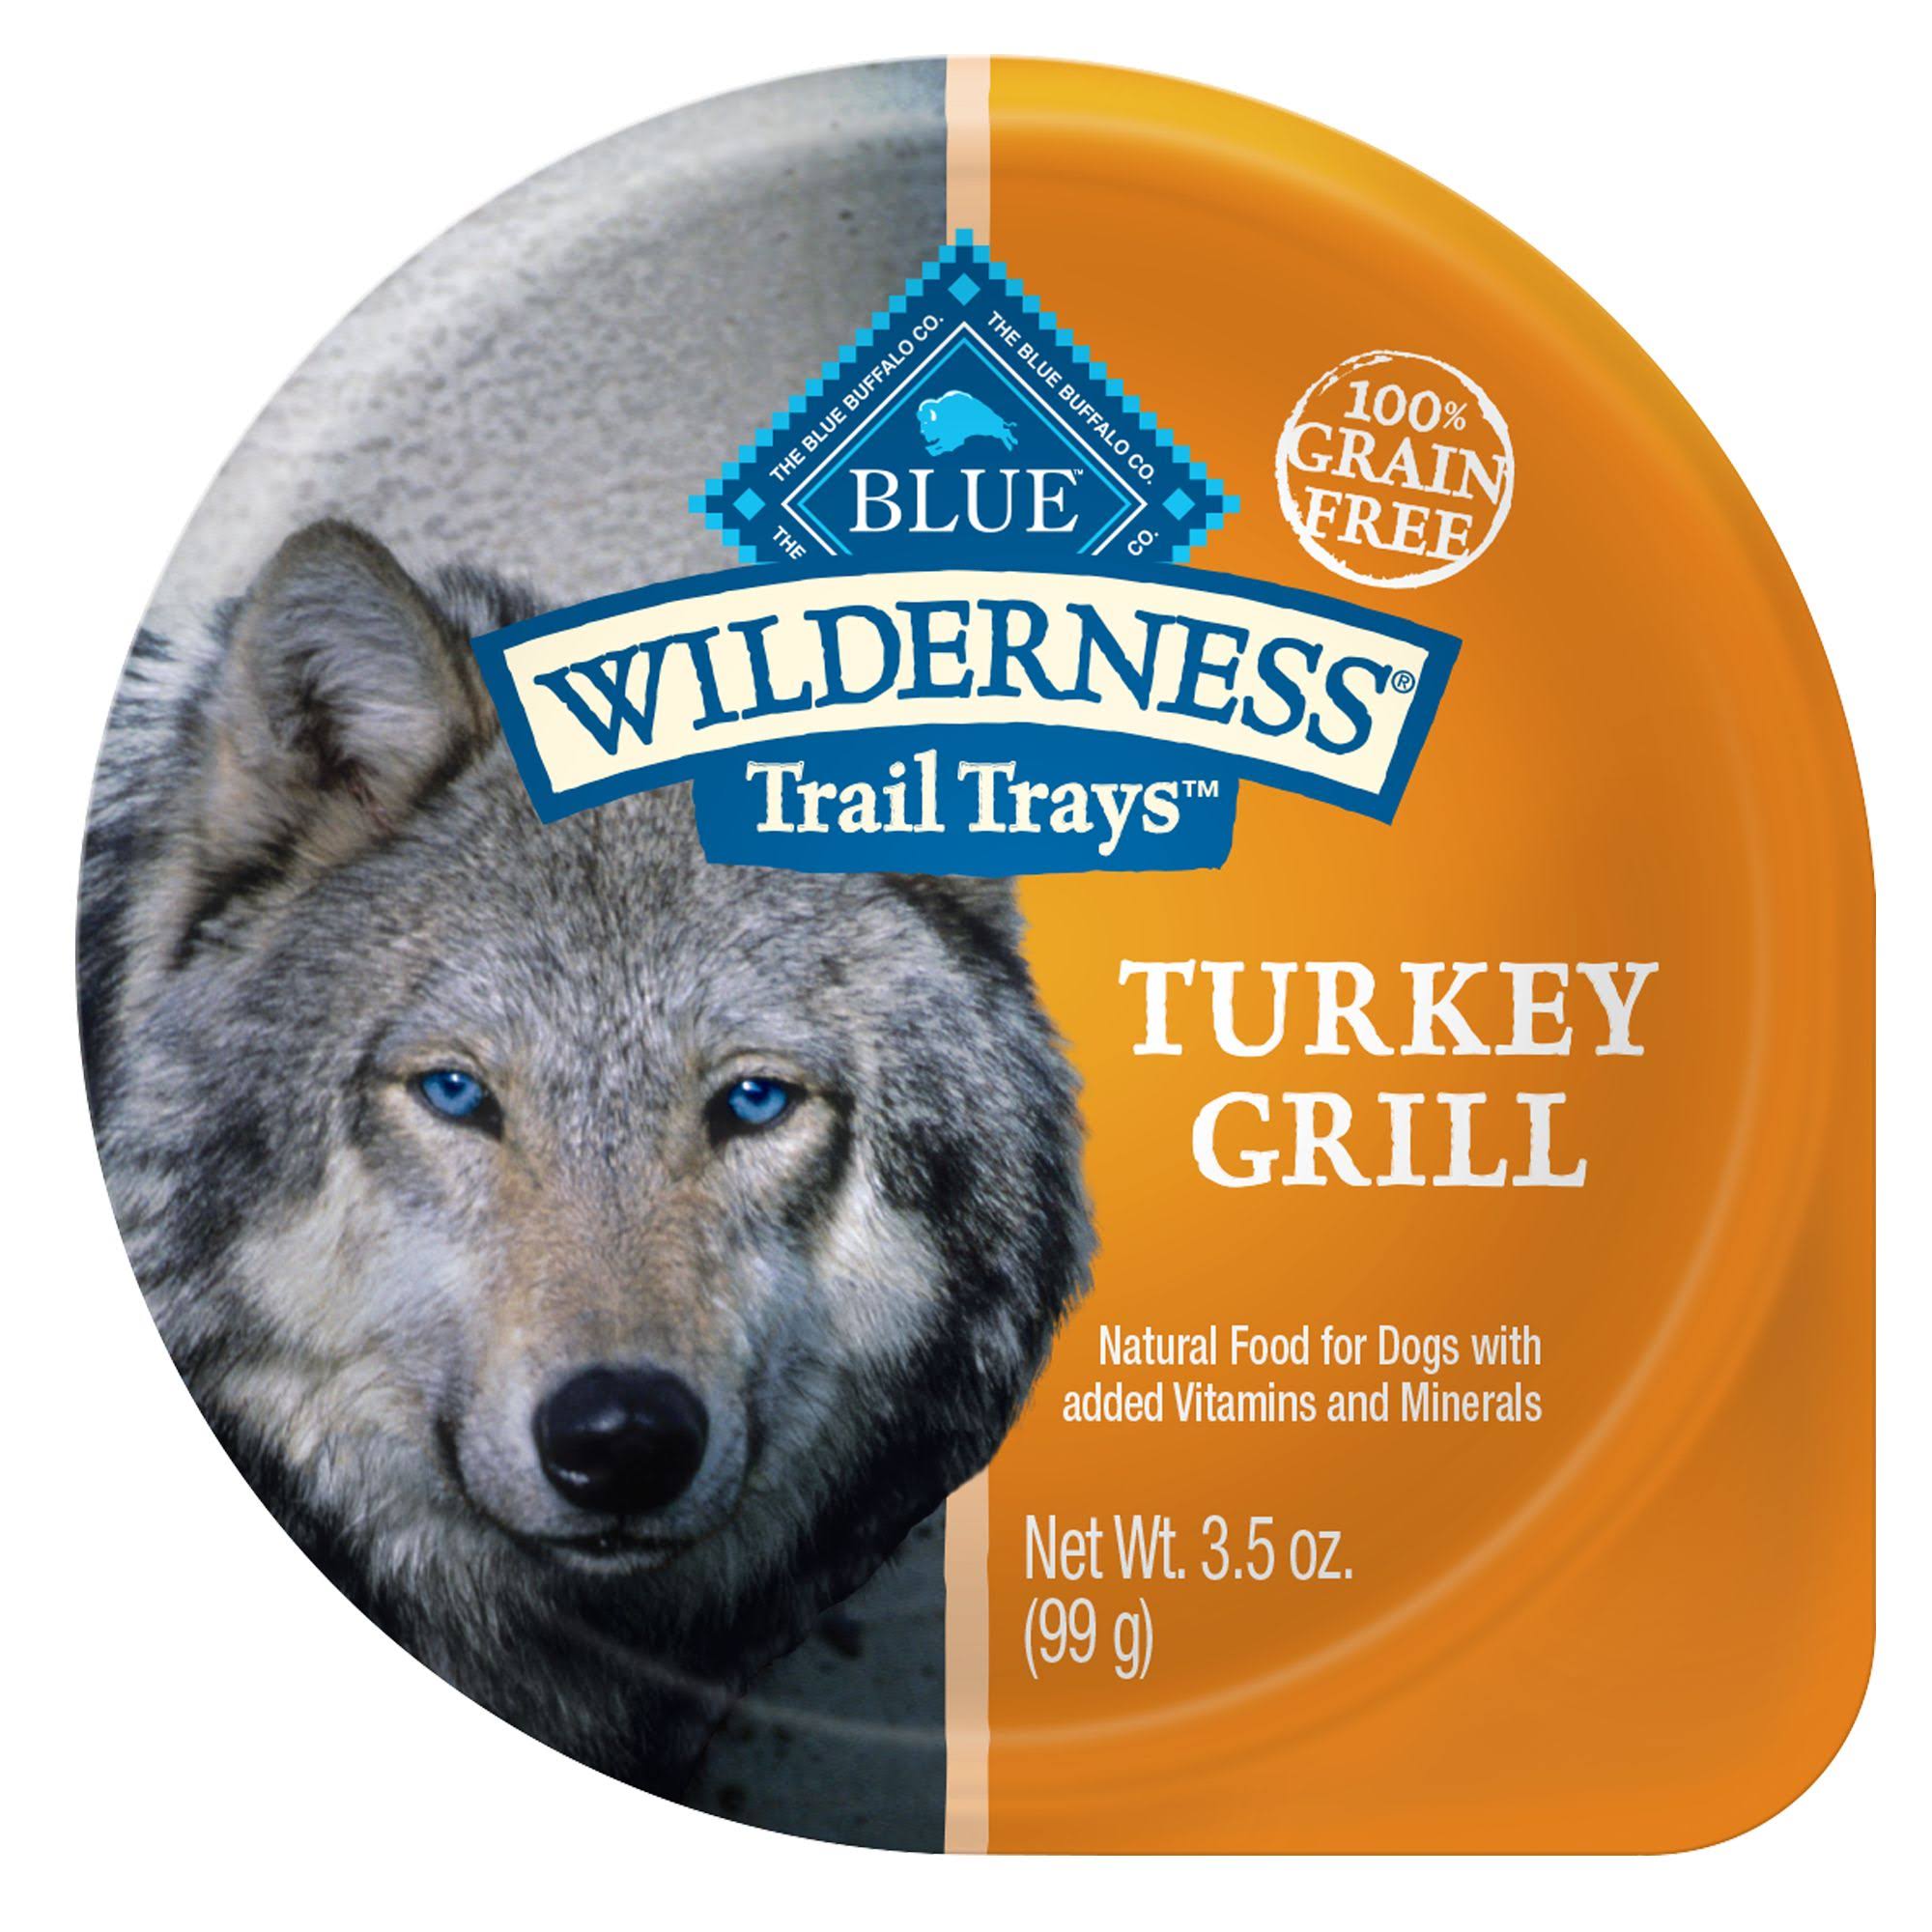 Blue Buffalo Wilderness Trail Trays Small Dog Food - Natural, Grain Free, Turkey Grill